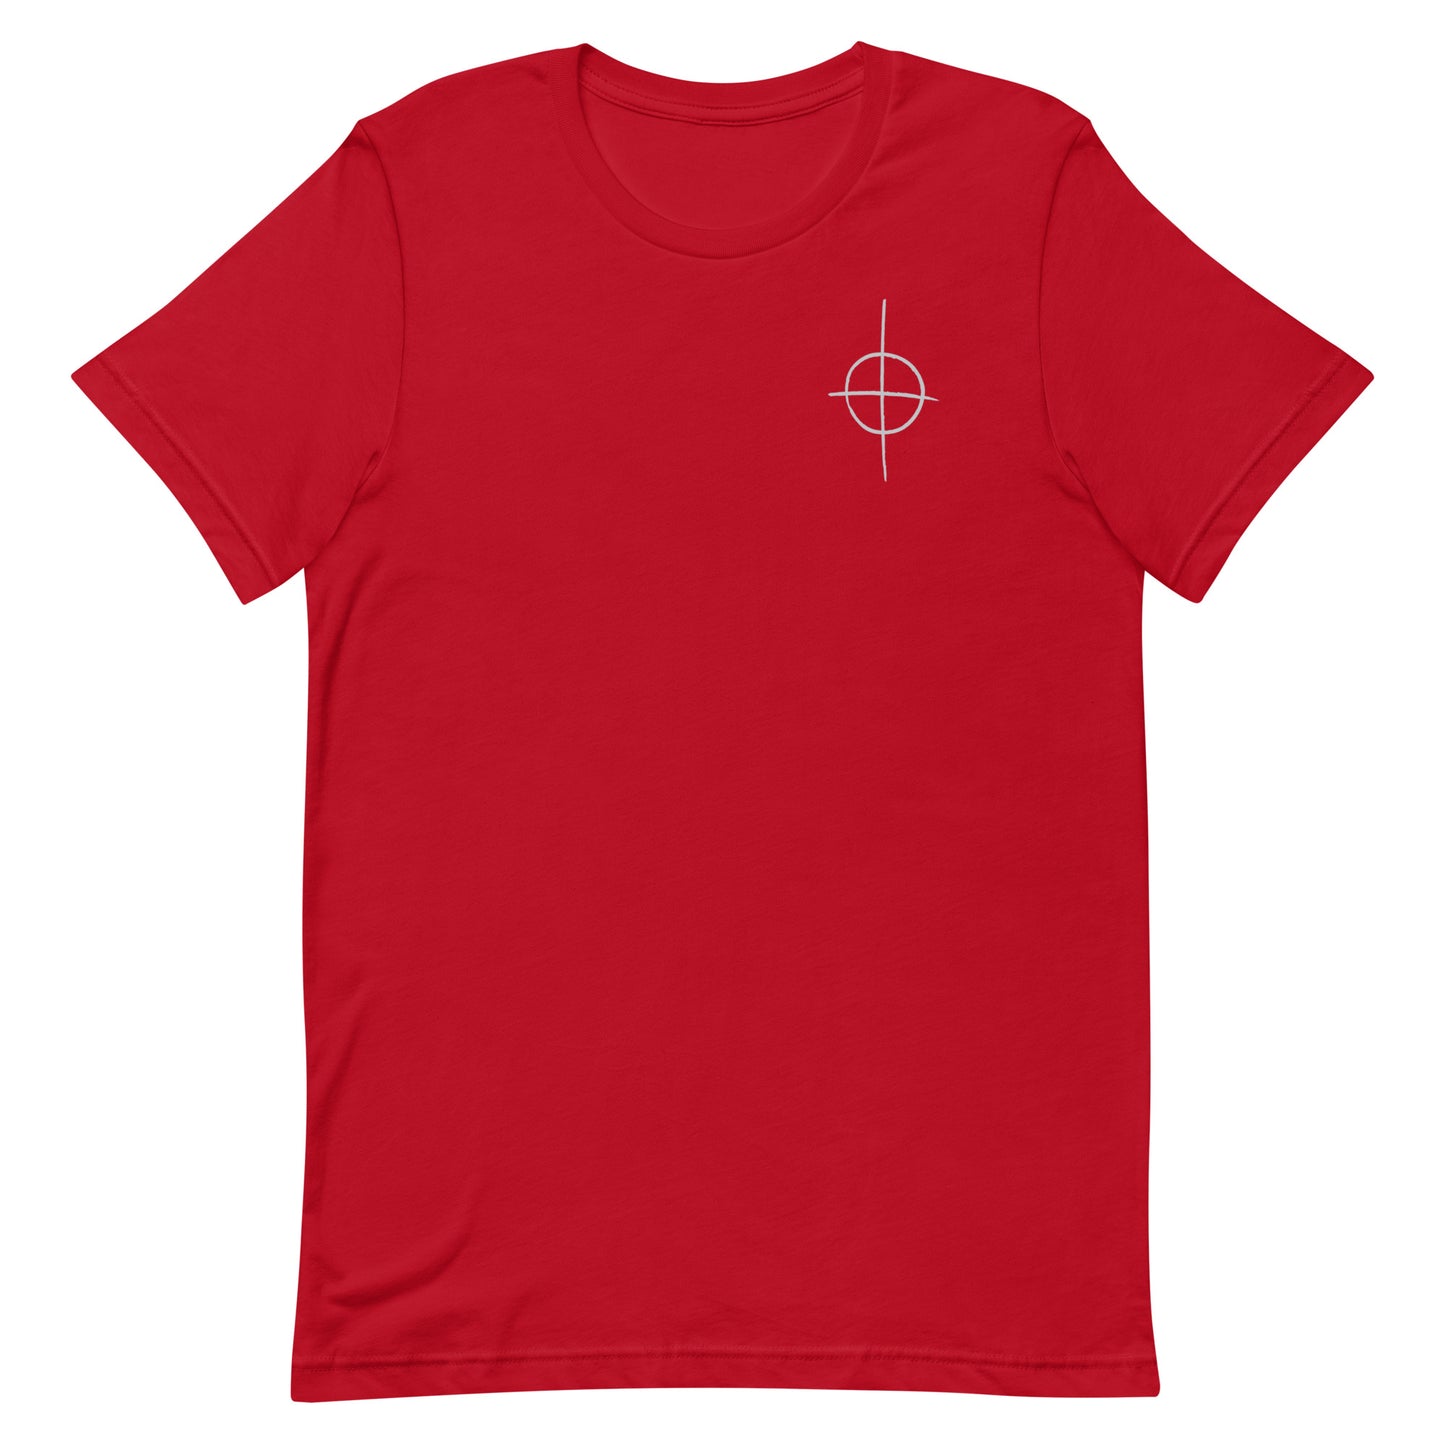 Clone T-shirt - Crosshair